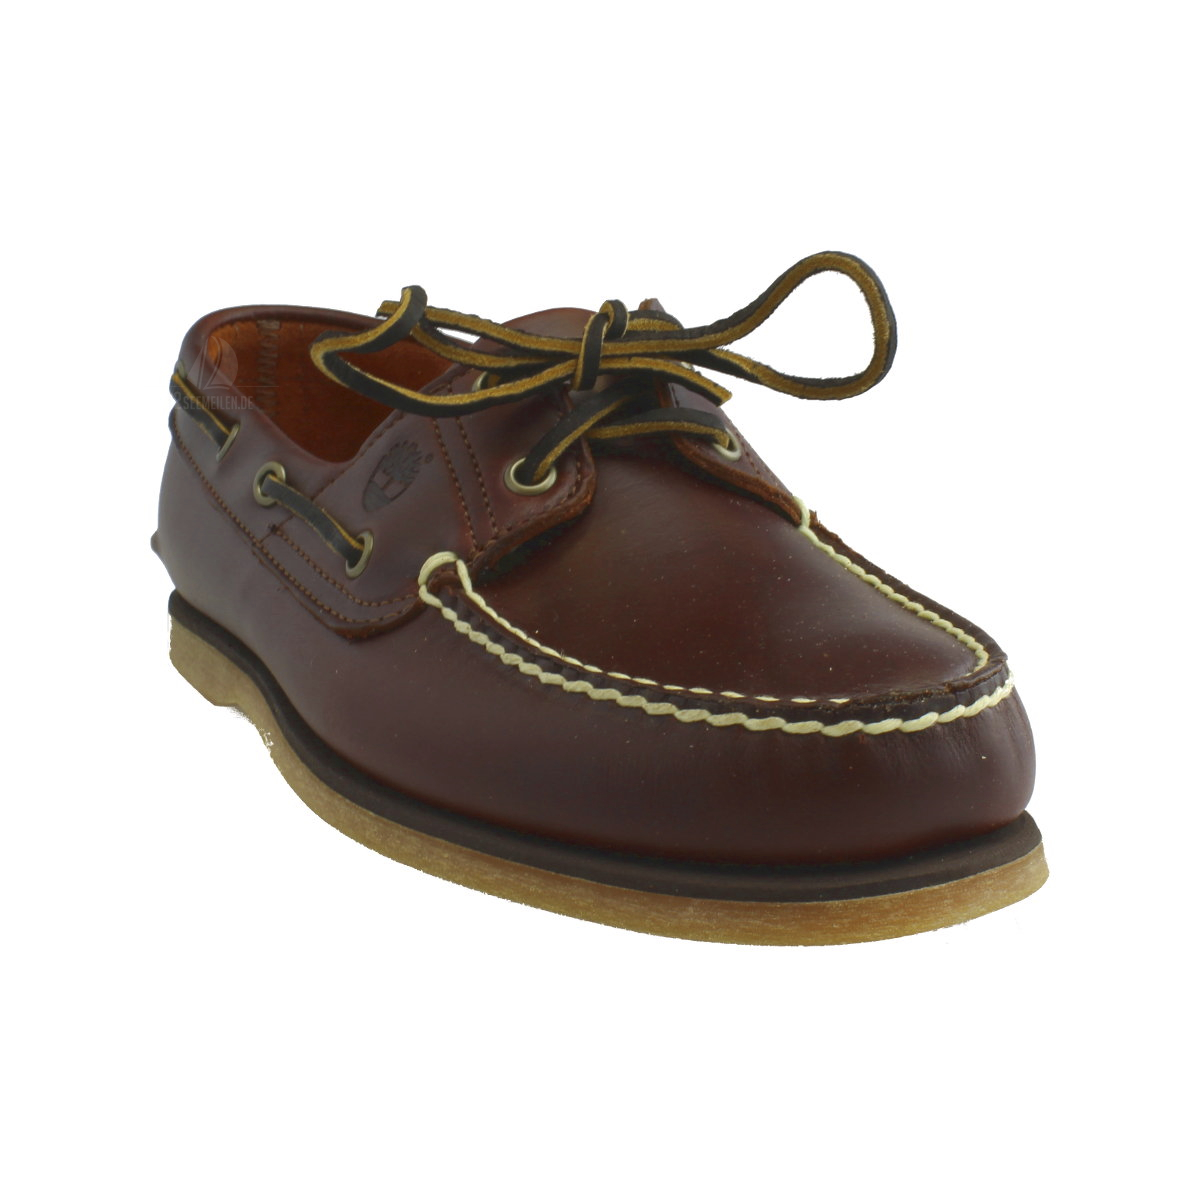 Timberland Classic Boat chaussures bateau Hommes brun - rouge eu 45 ( us 11 )